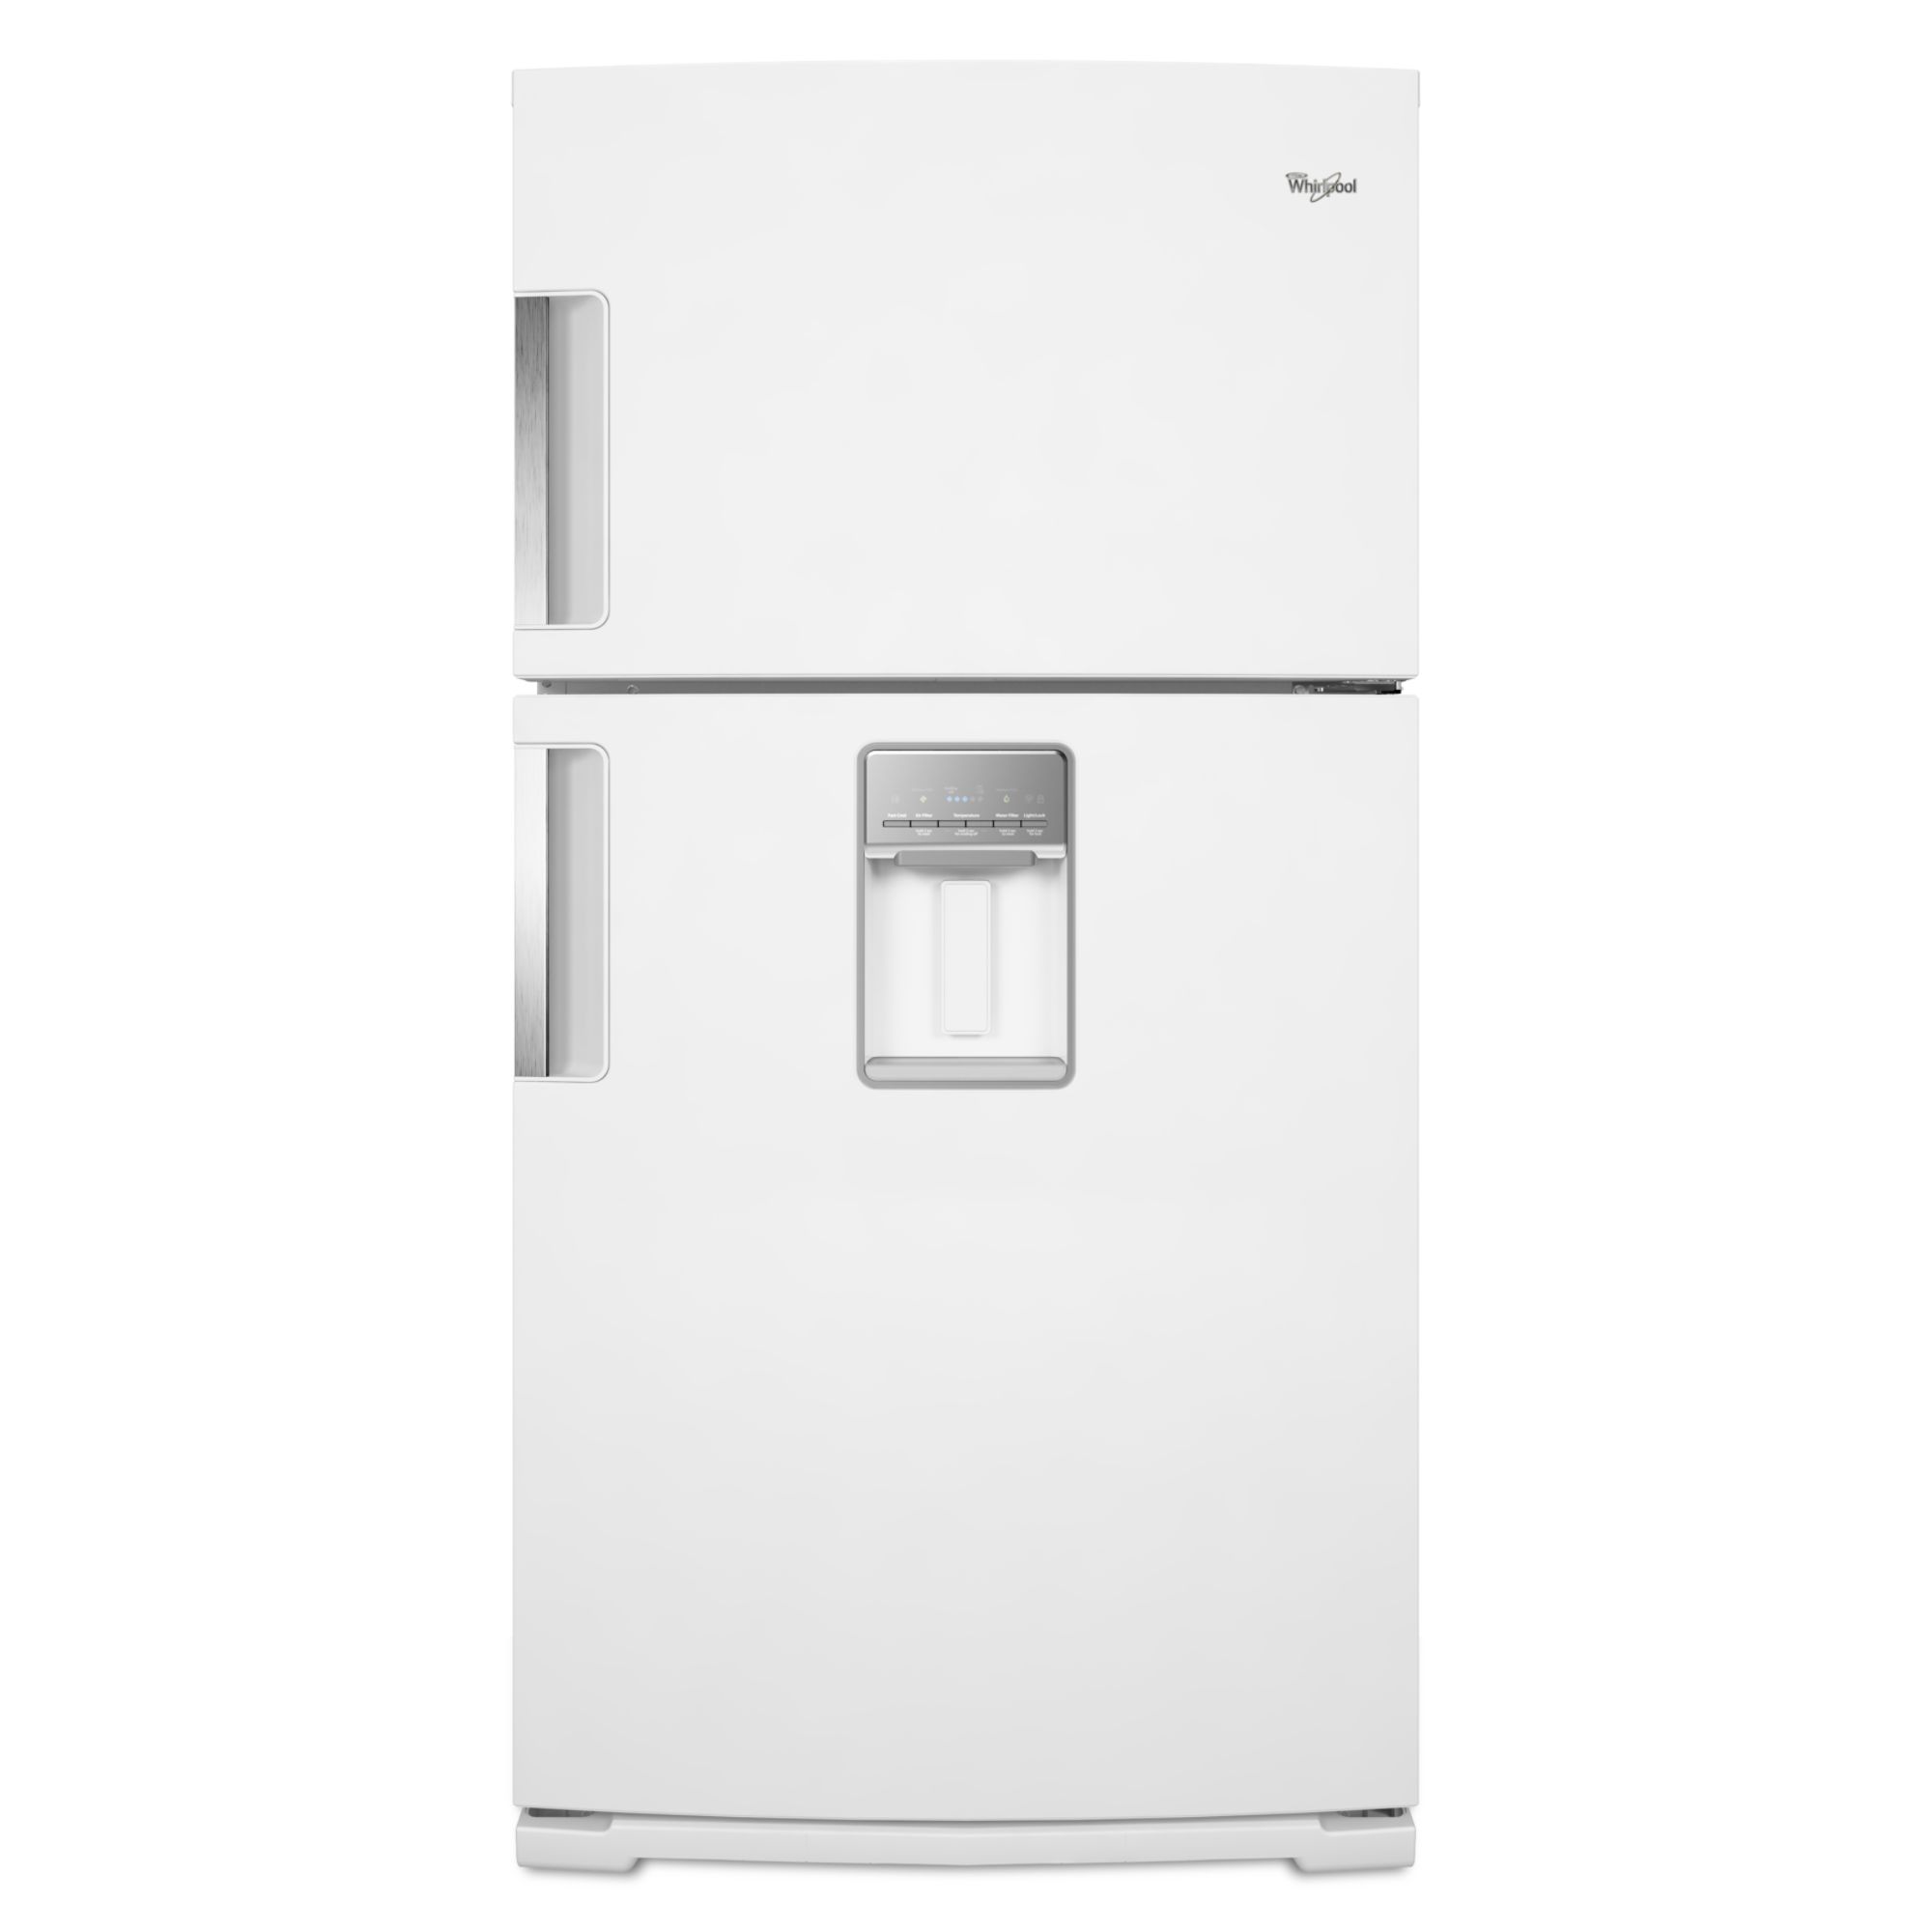 Whirlpool 21.1 cu. ft. Top-Freezer Refrigerator w/ Exterior Water Dispenser - White